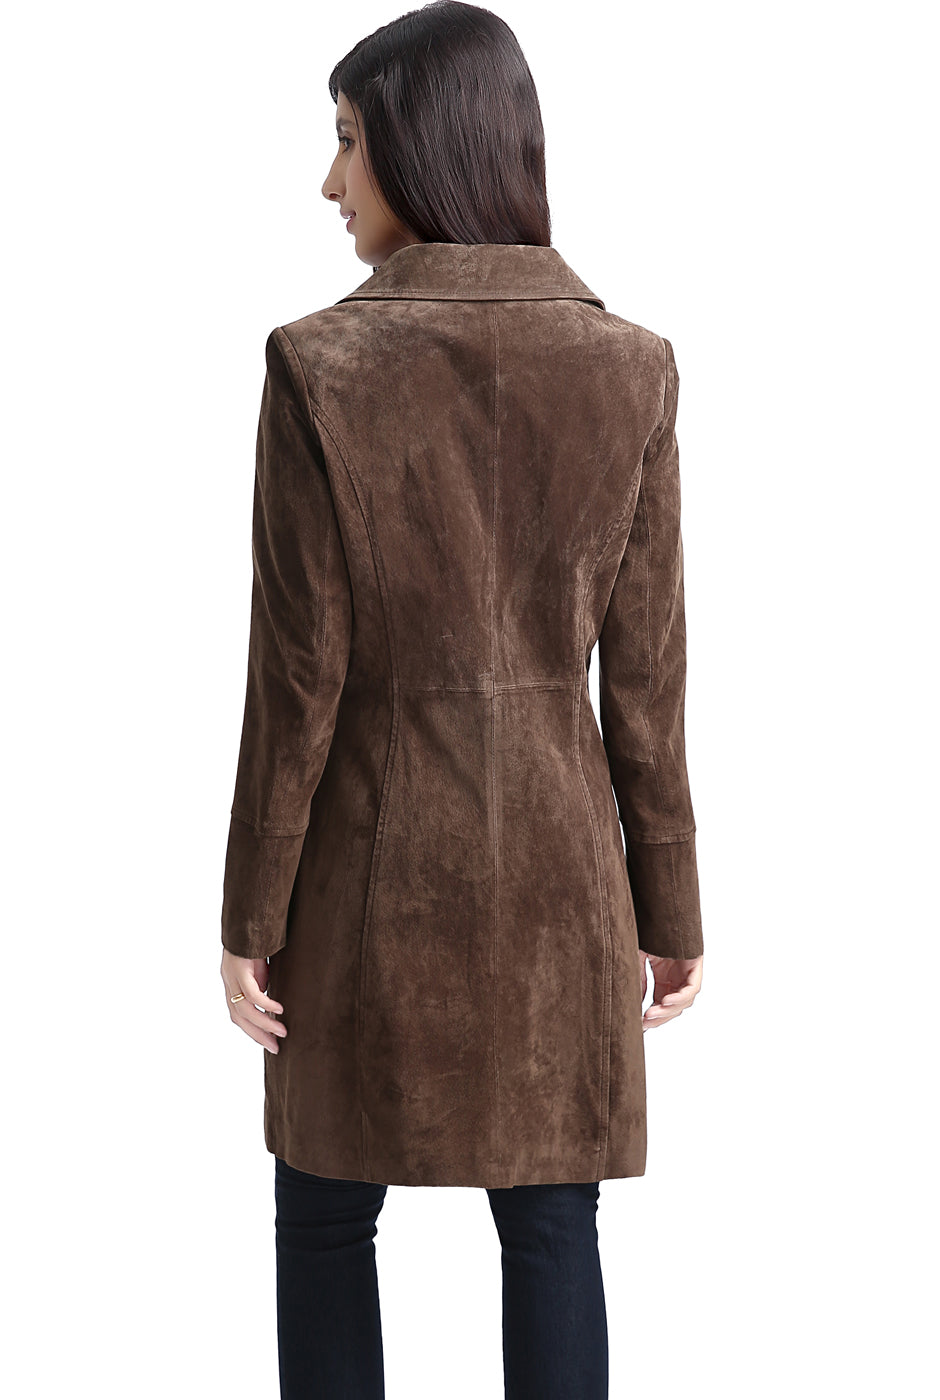 BGSD Women Aubrey Suede Leather Walking Coat